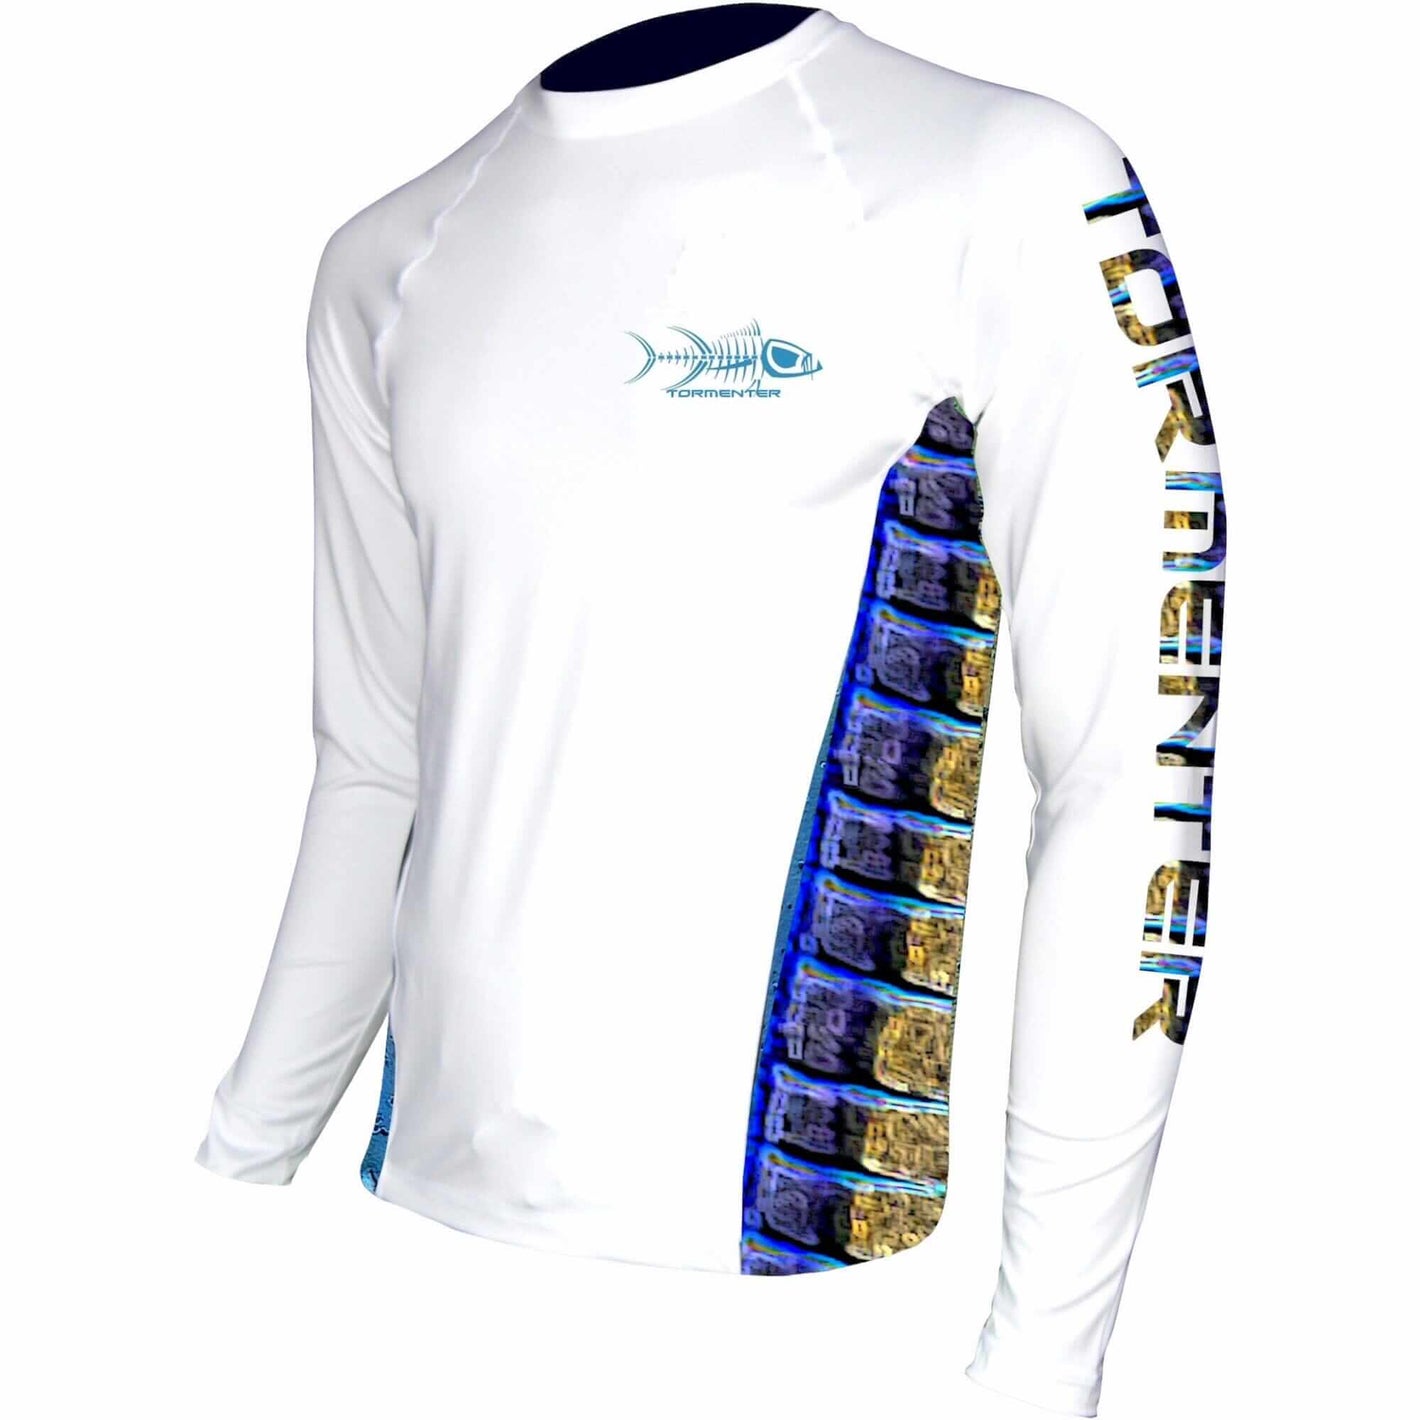 Marlin Side Venting Performance Shirt Men's SPF Ocean Fishing Tops Tormentor Ocean S 